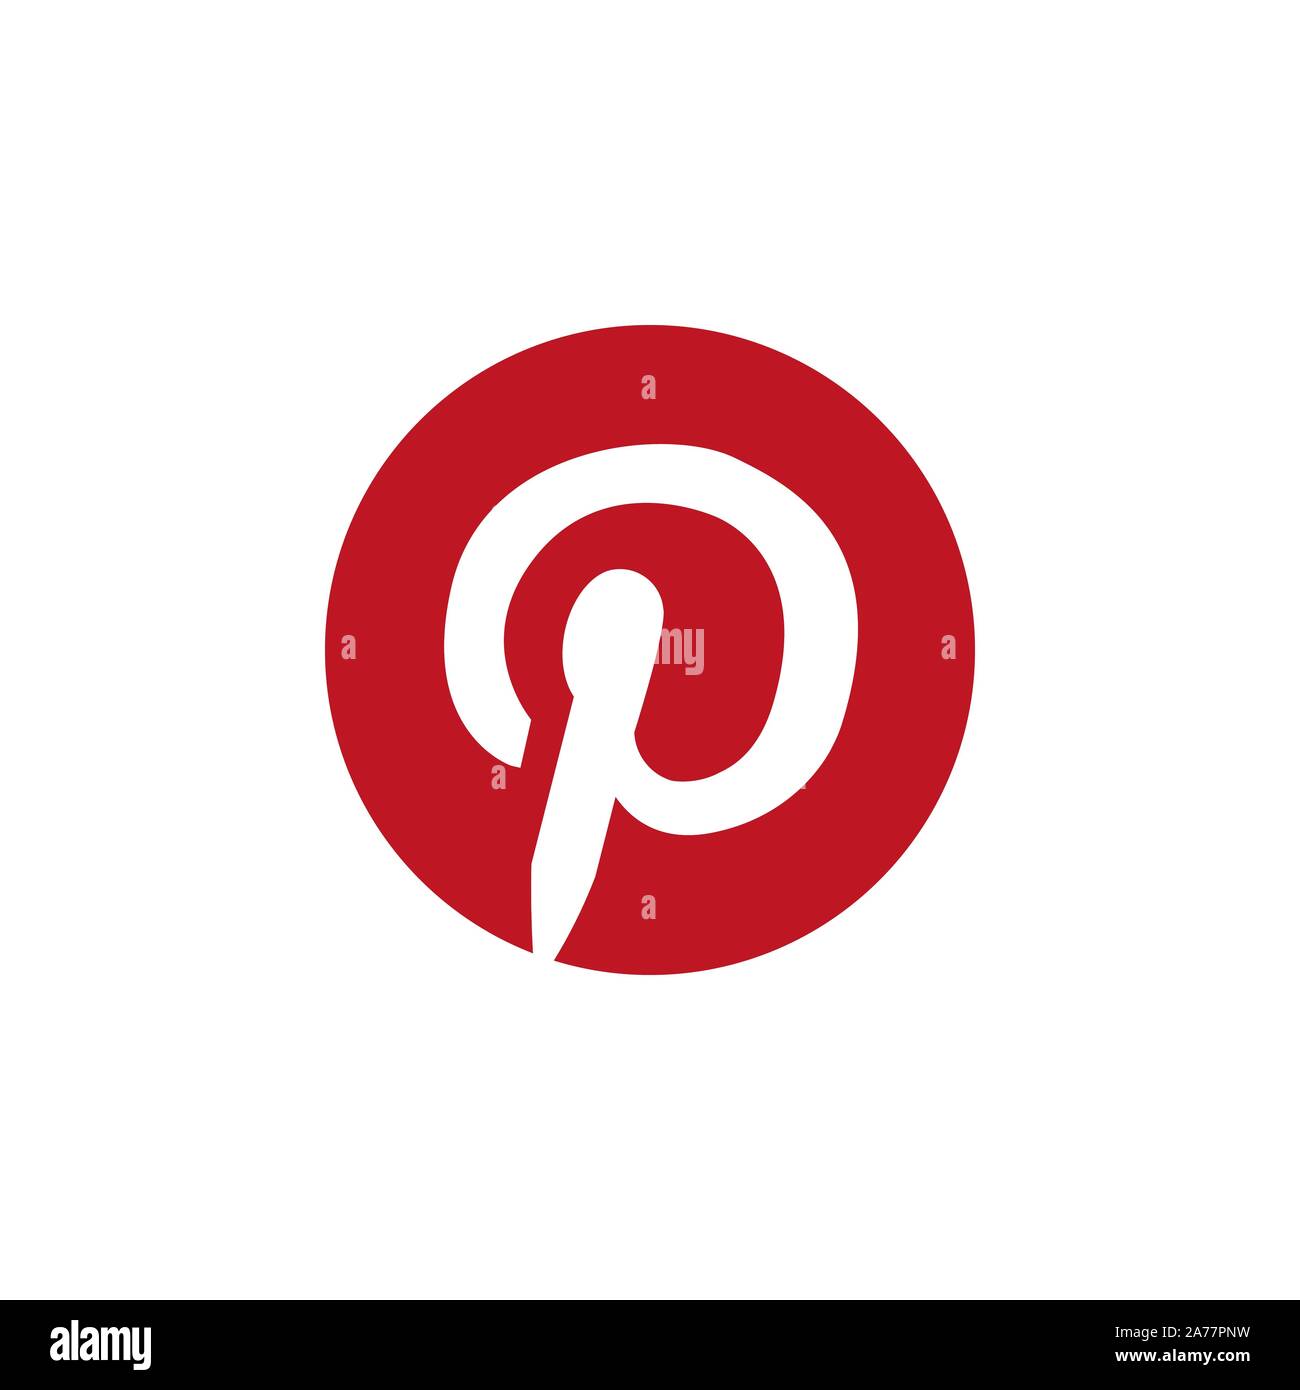 Icons on Pinterest